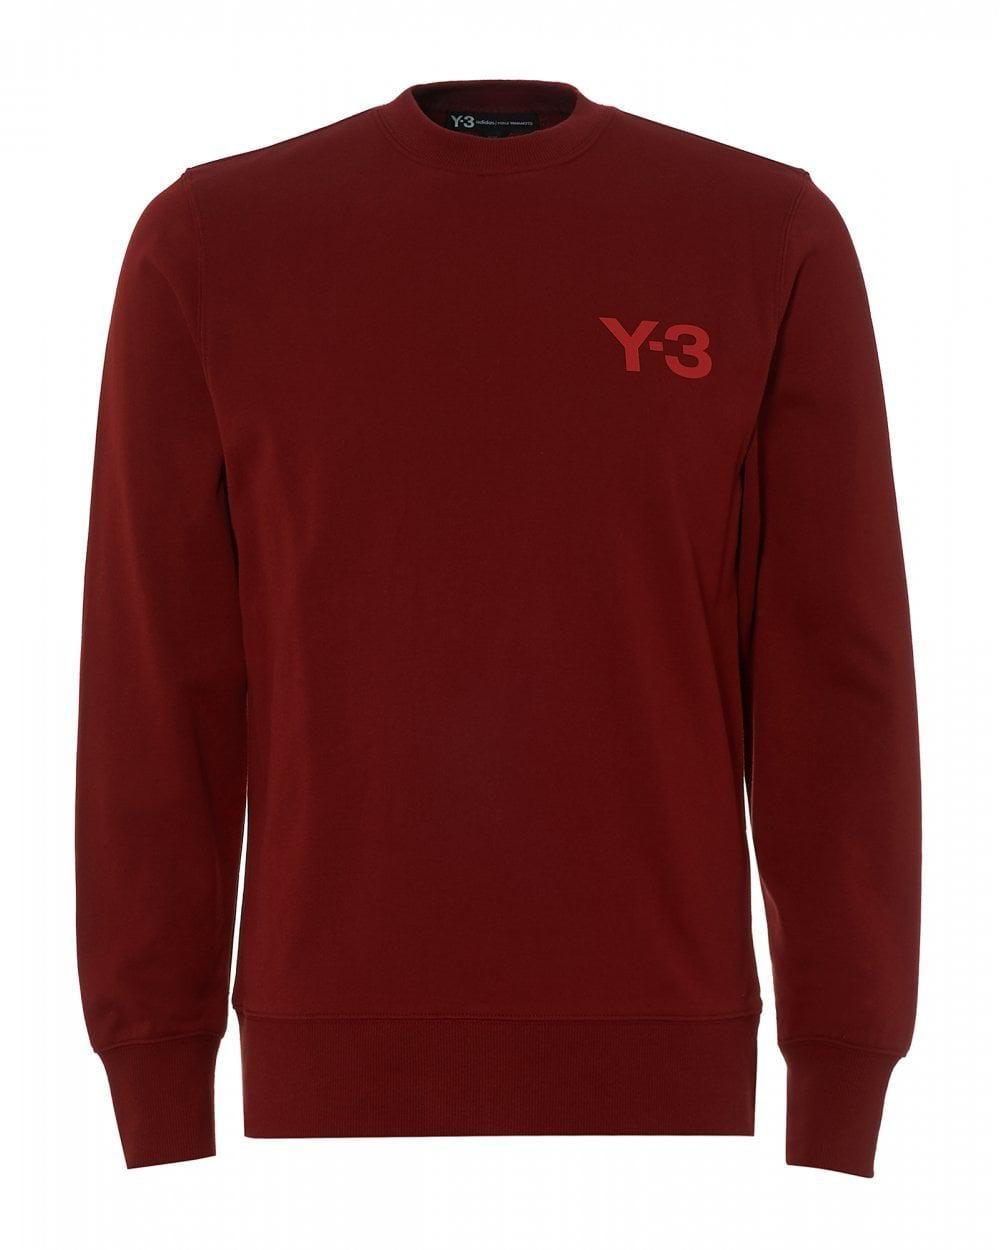 Red Crew Logo - Y-3 Classic Logo Sweatshirt, Red Crew Neck Sweat in Red for Men - Lyst